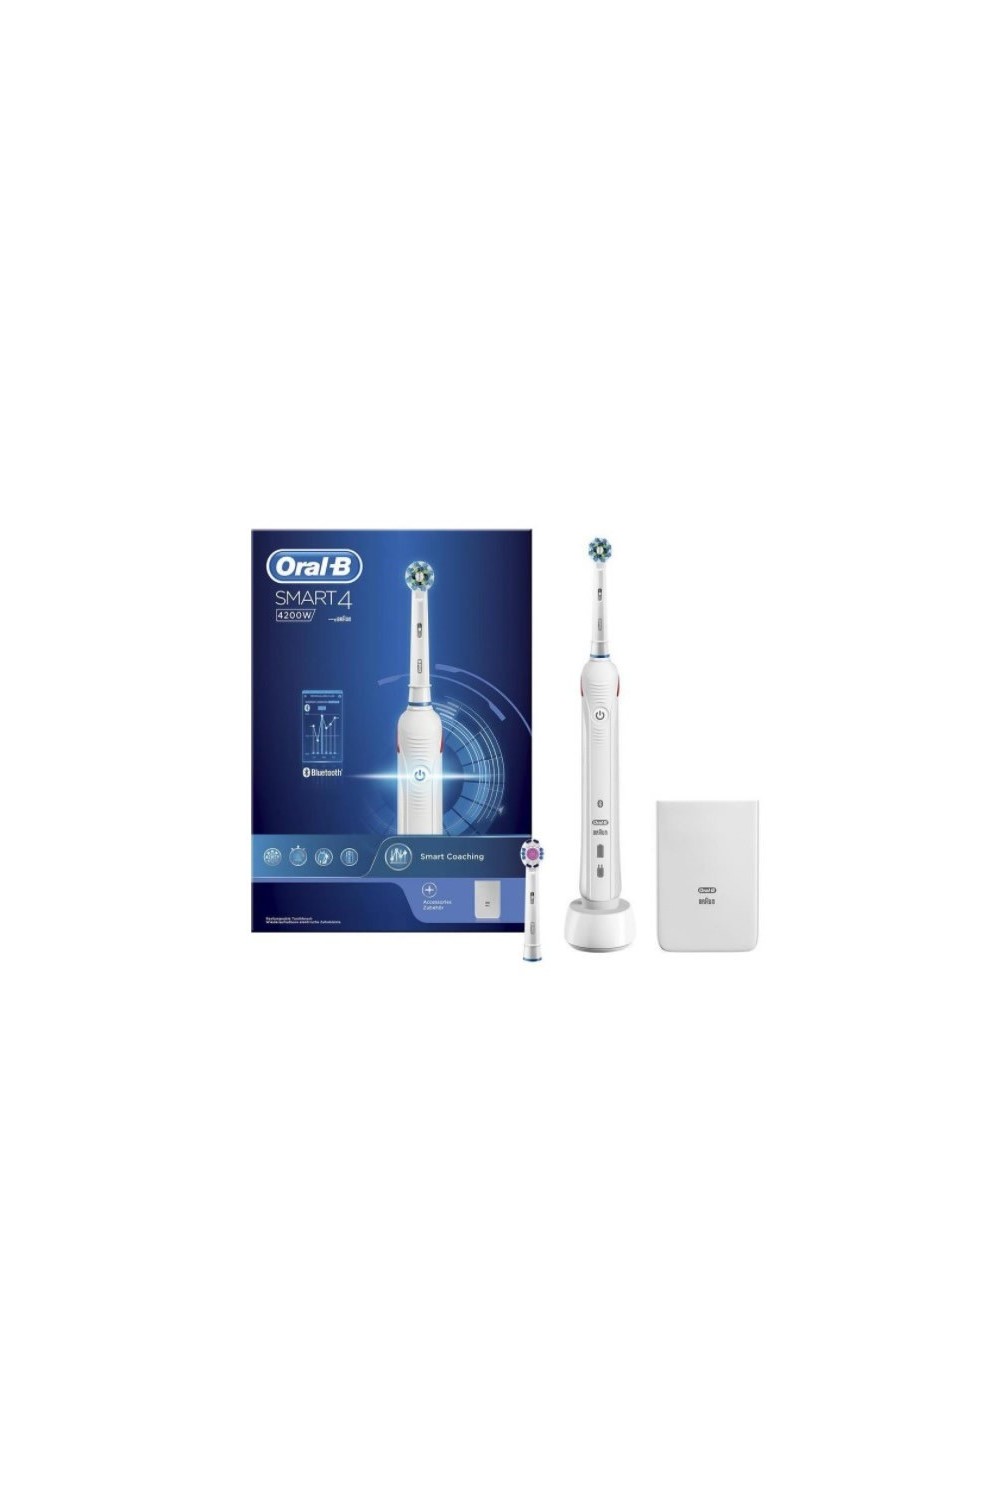 ORAL-B - Oral- B Smart 4 4200w White Electric Toothbrush